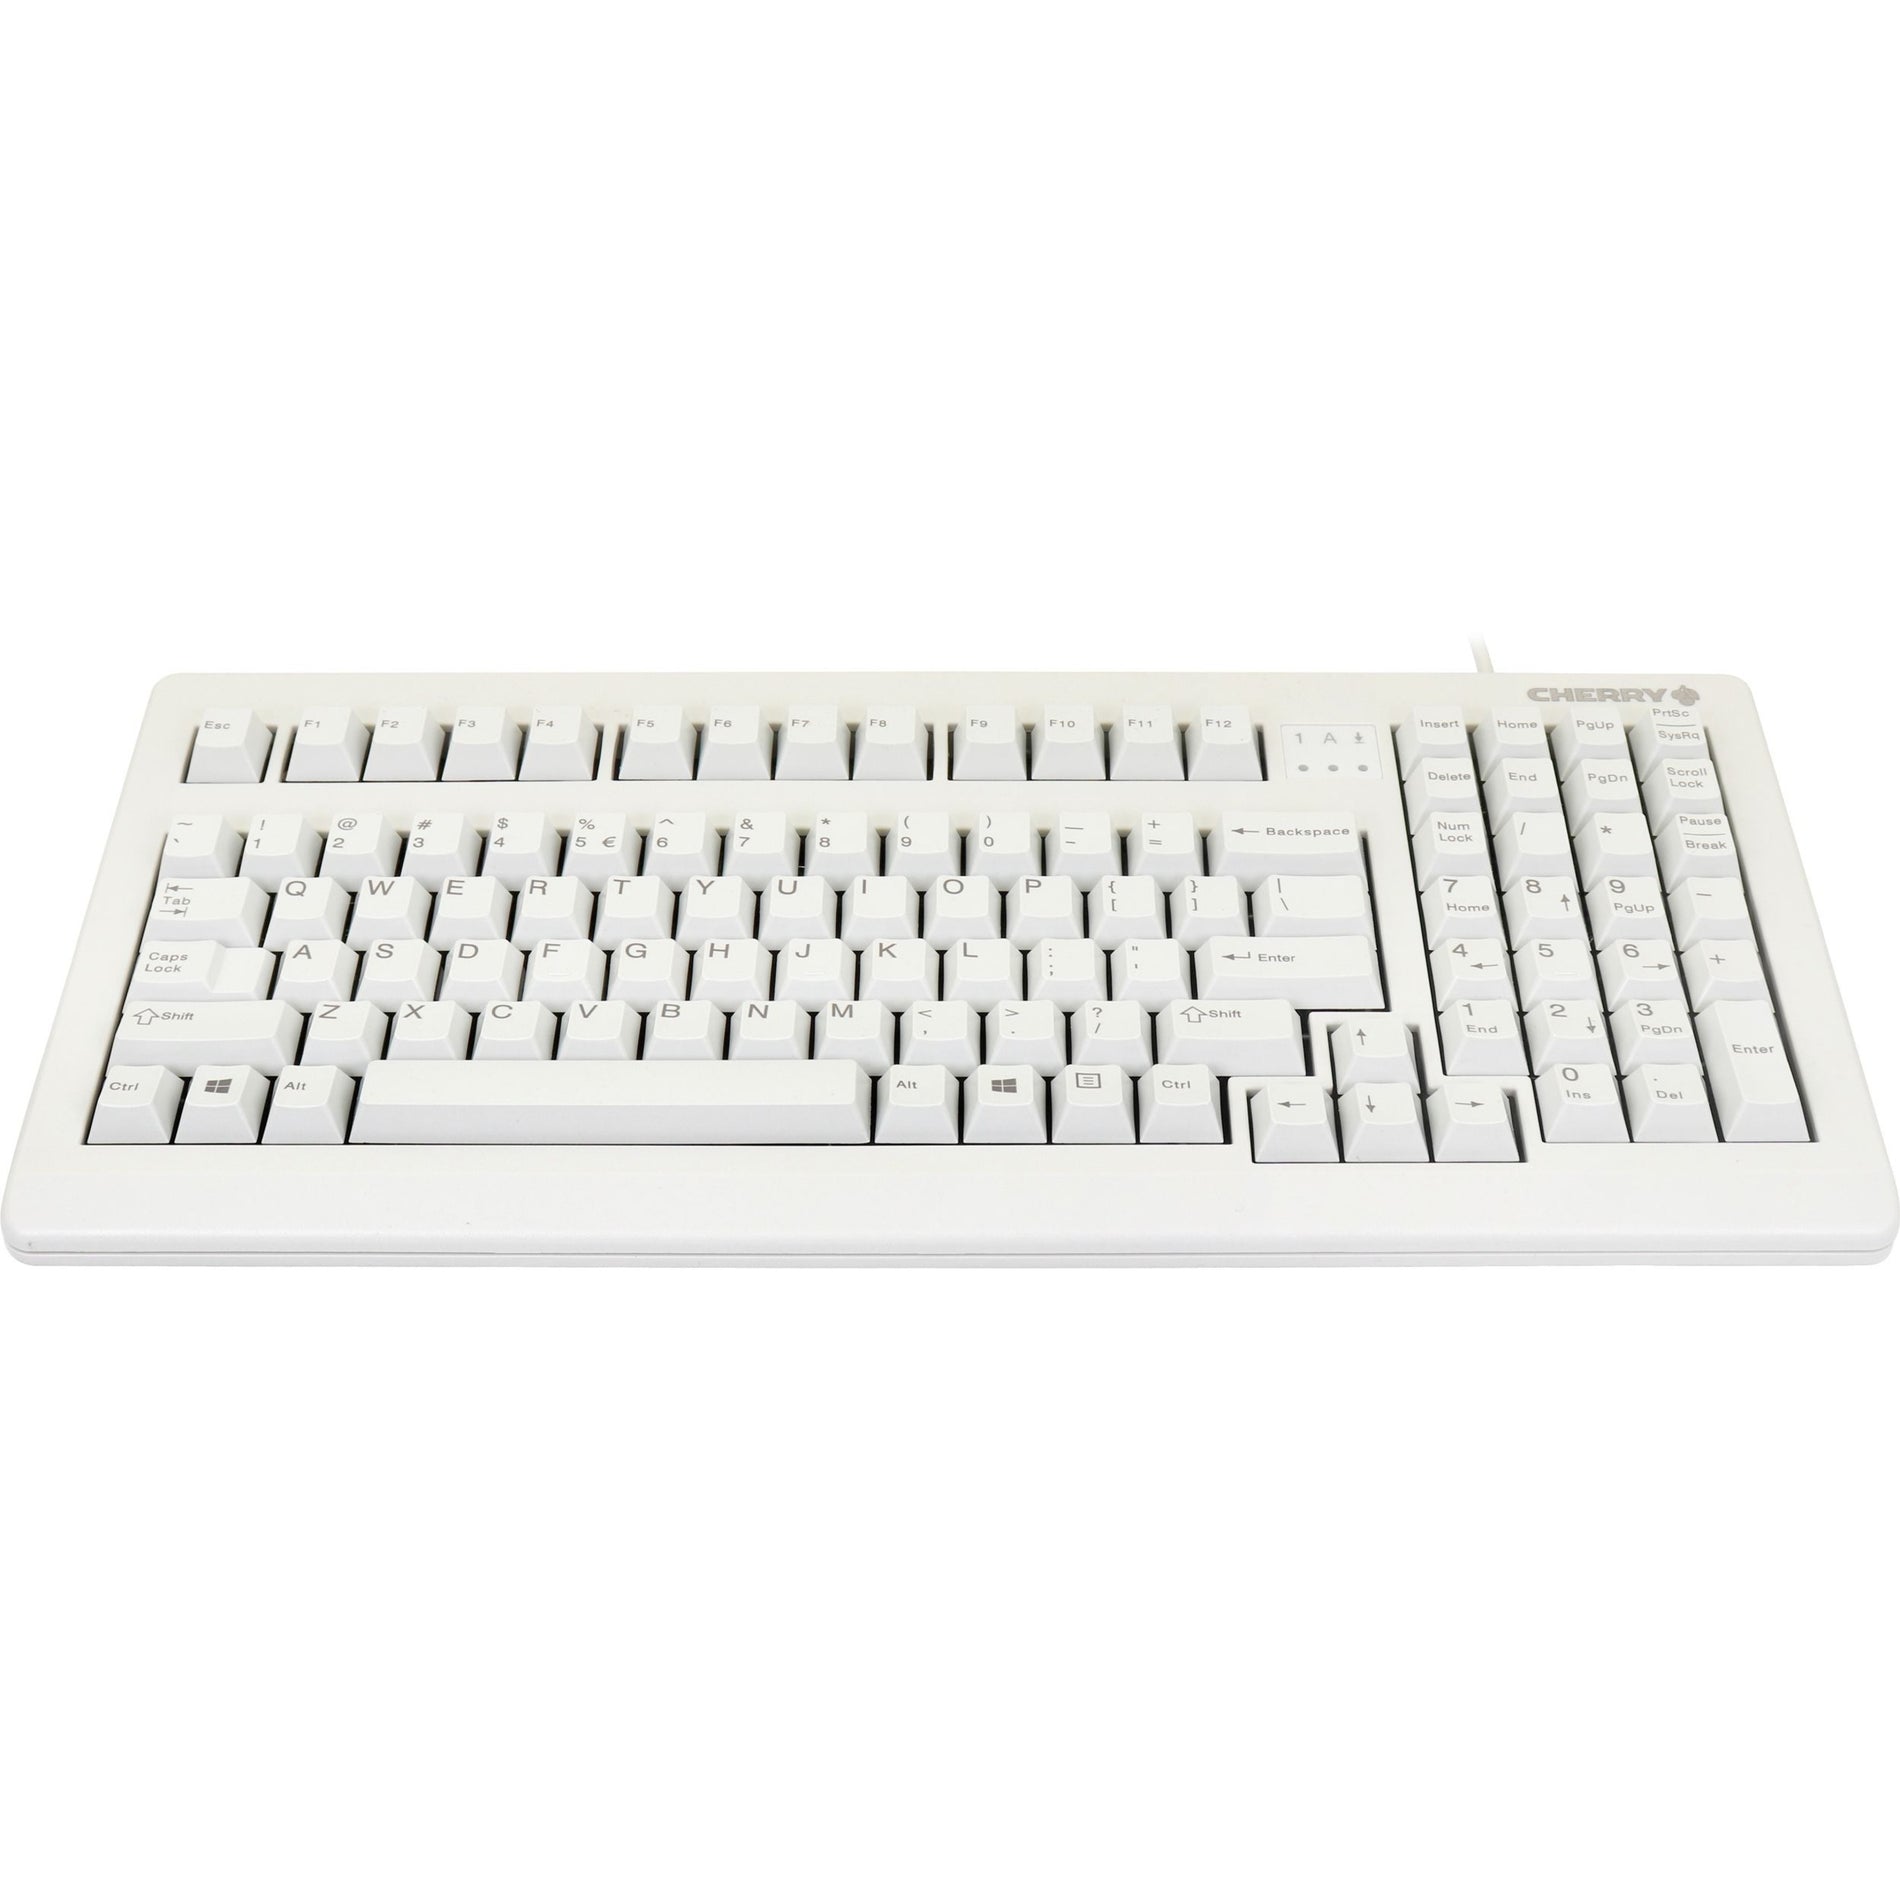 CHERRY G80-1800 G80-1800LPCEU-0 Light Gray Wired Mechanical Keyboard, Compact Design, Ergonomic, 3-Year Warranty